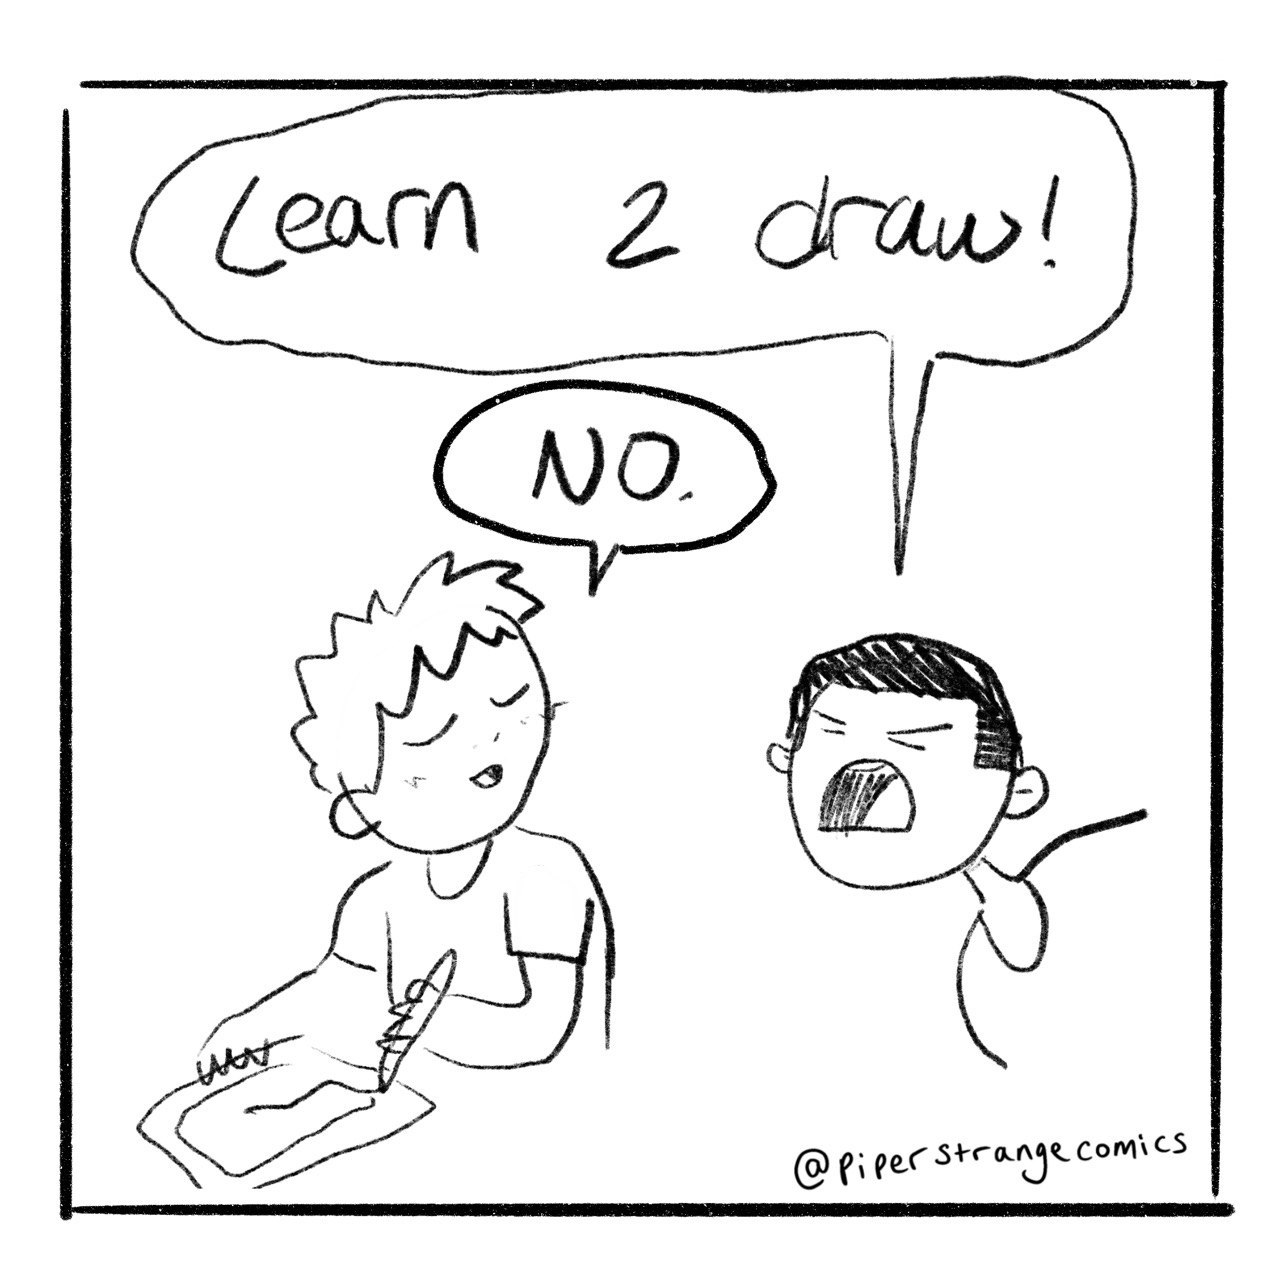 Learn 2 draw